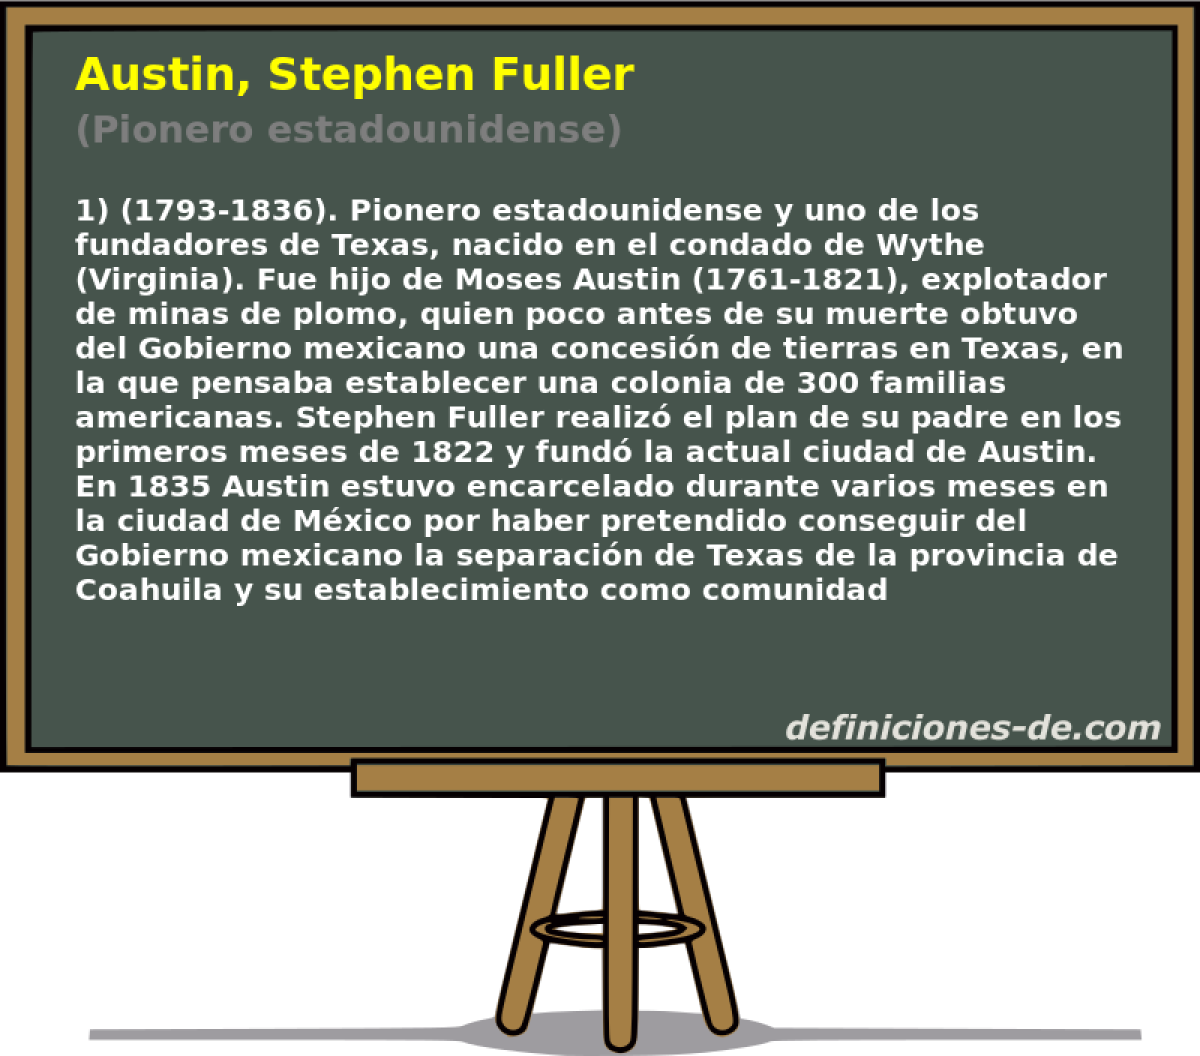 Austin, Stephen Fuller (Pionero estadounidense)